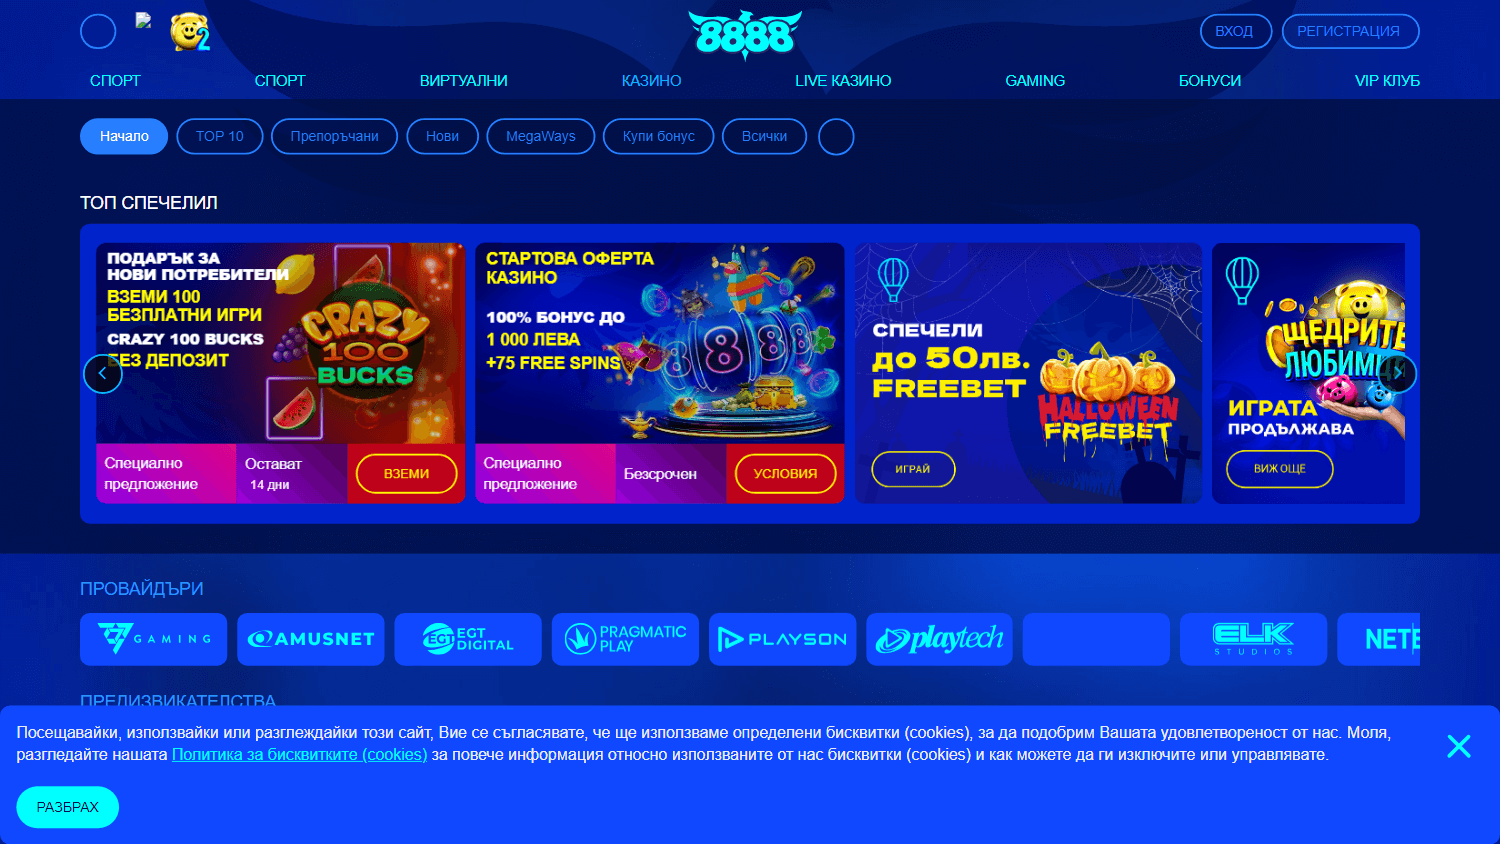 8888.bg_casino_homepage_desktop